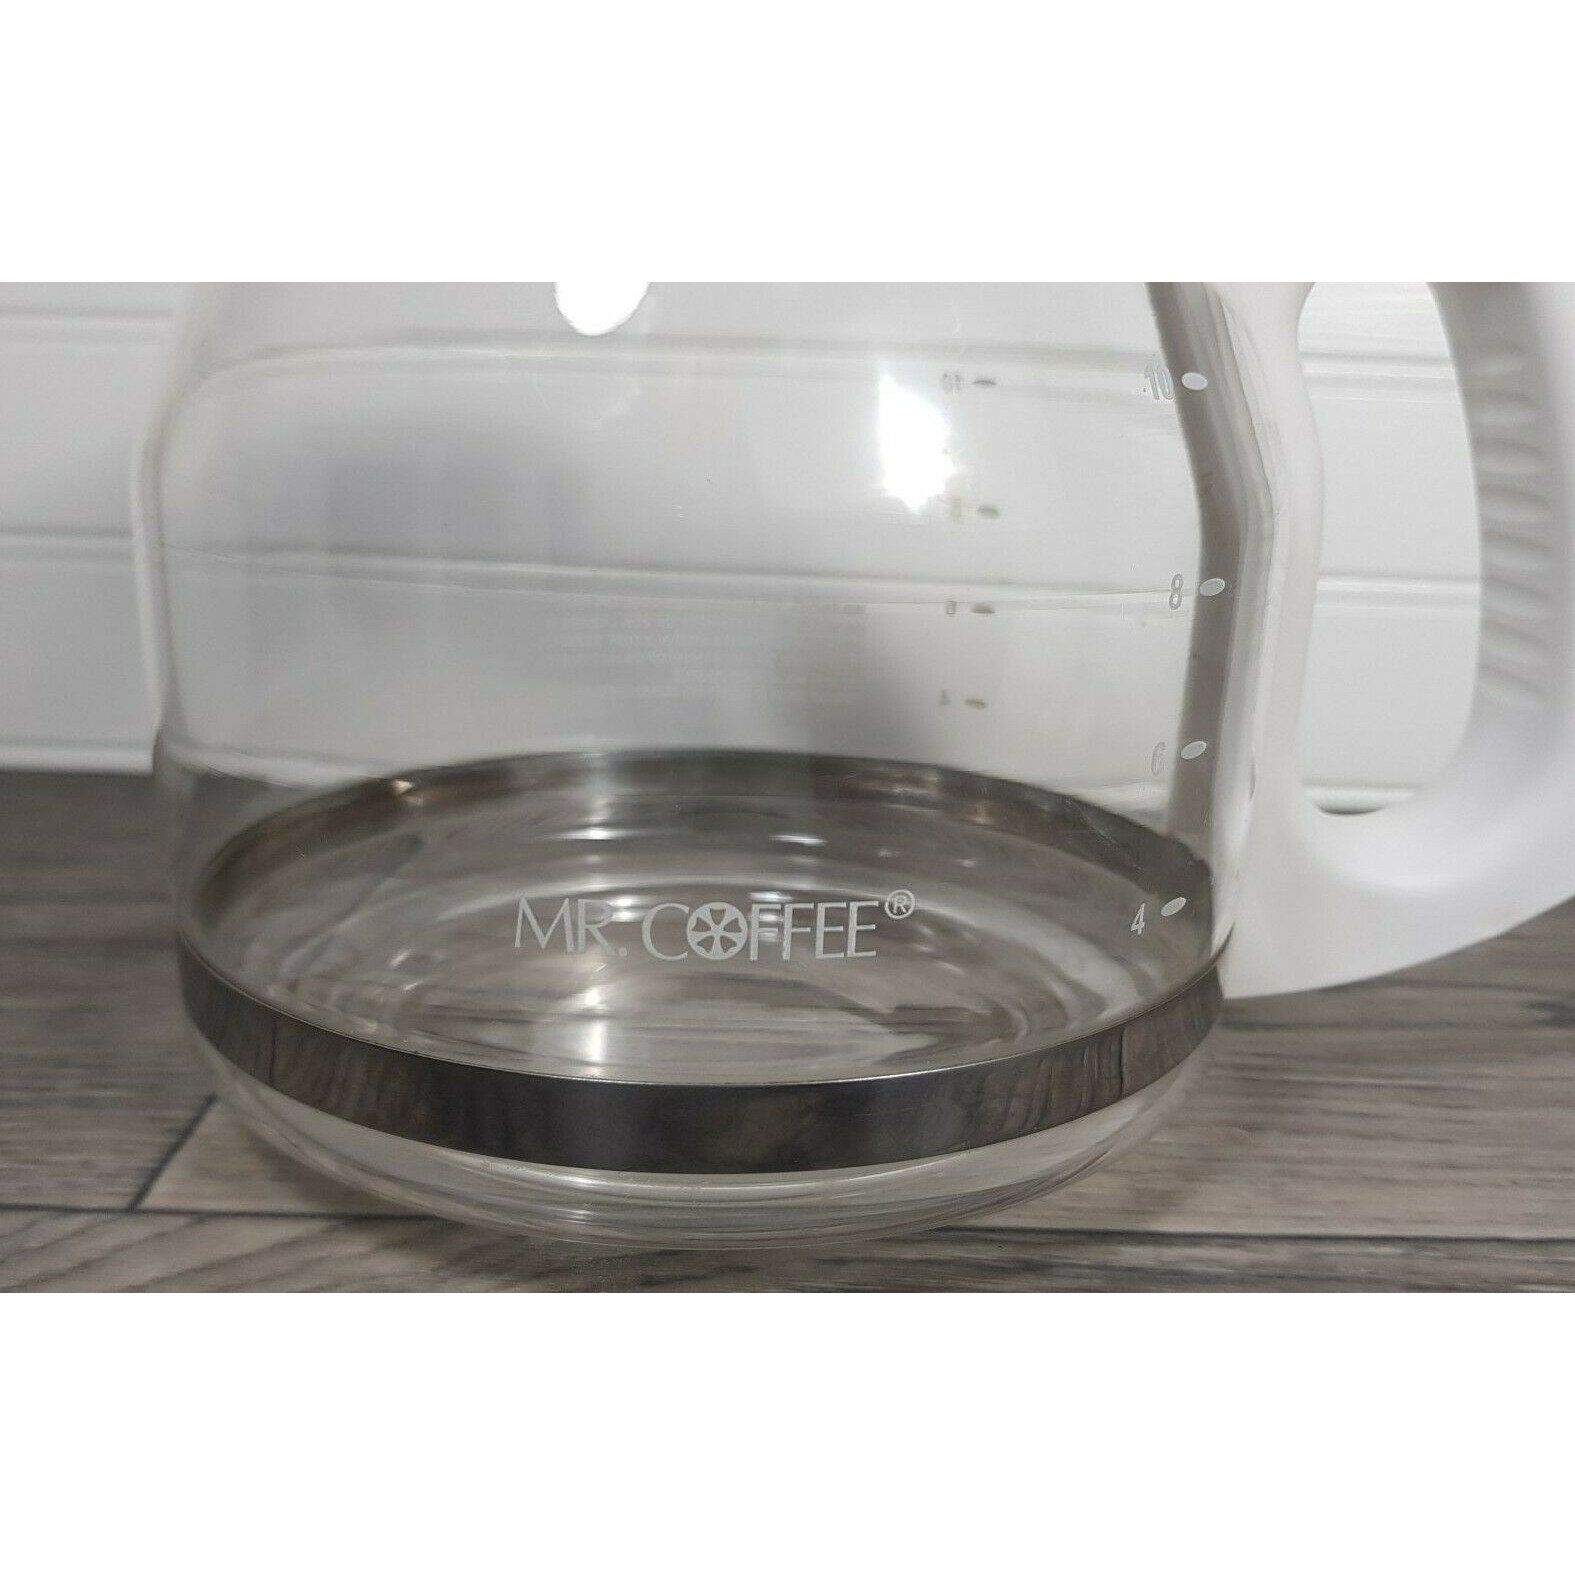 Original Replacement Jug Replacement Coffee Pot Coffee Pot Bosch 12014695 Coffee Machine 